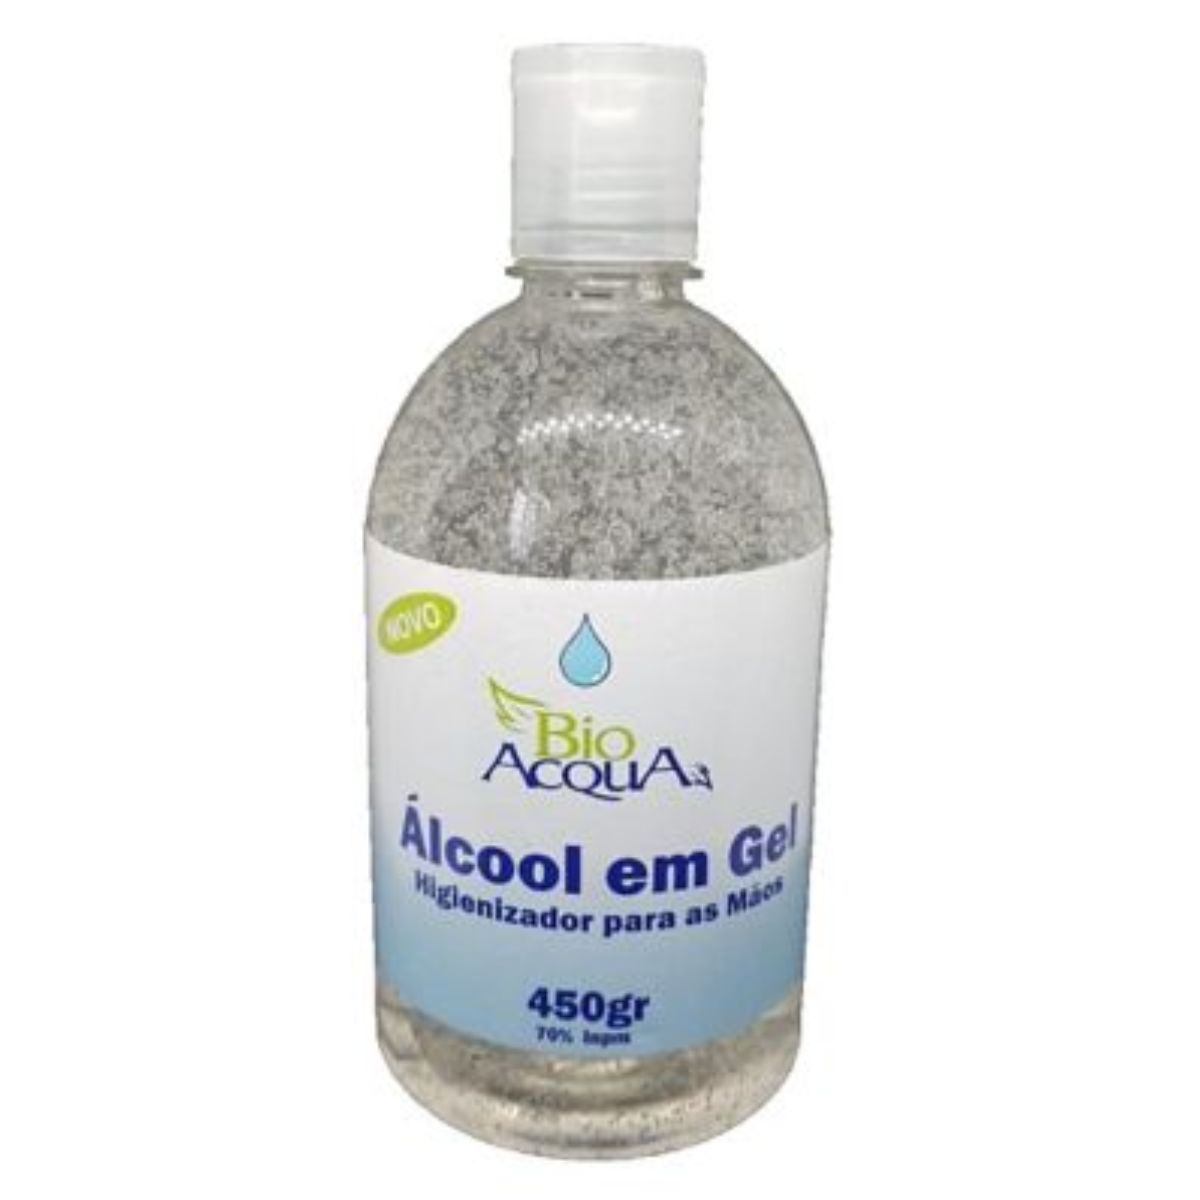 alcool-gel-70-maos-bio-acqua-sf-450gr-1.jpg